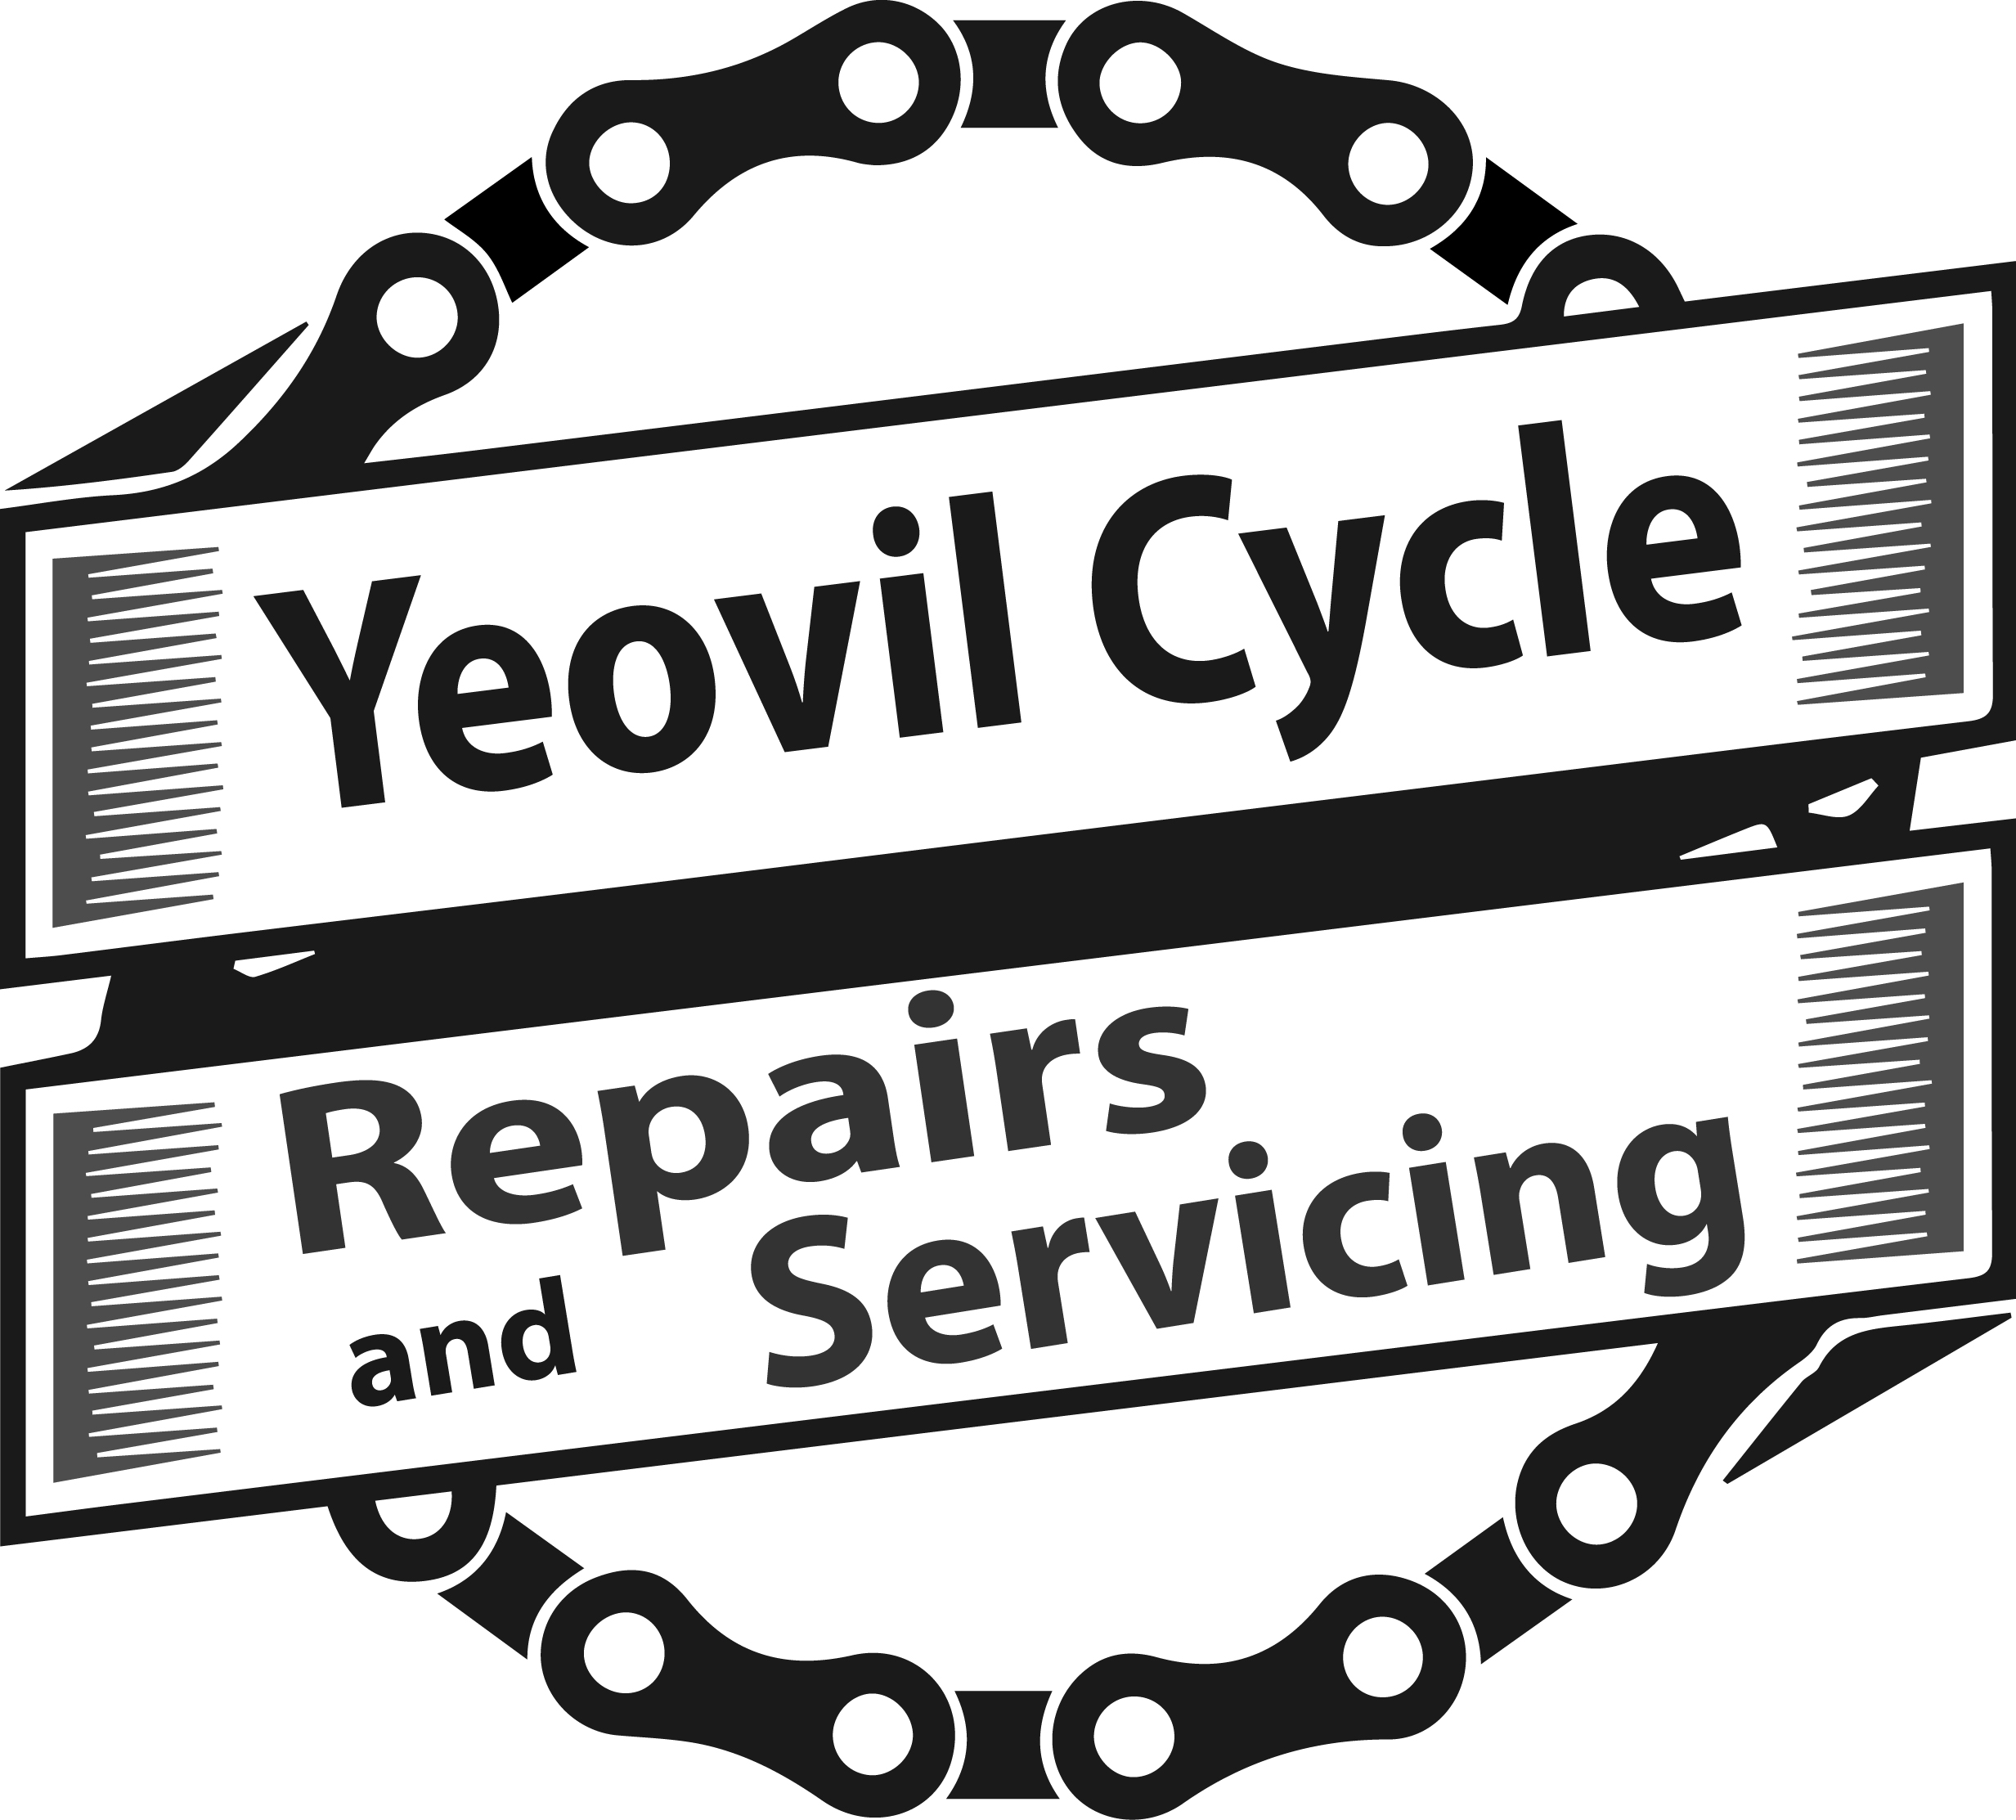 YEOVIL CYCLE REPAIRS & SERVICING